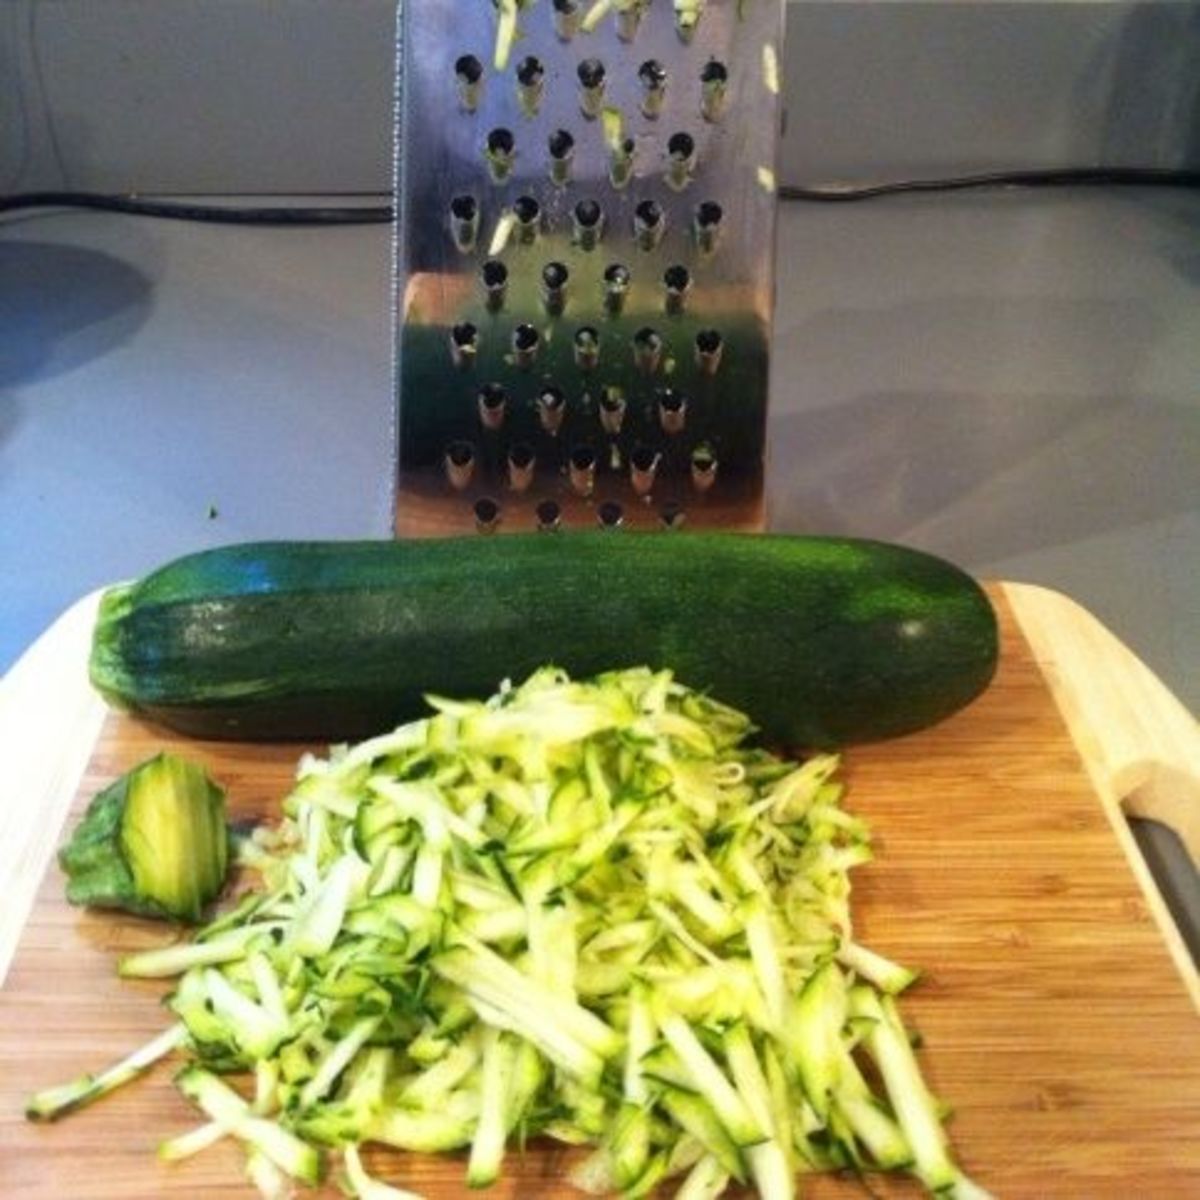 Preparing zucchini for freezing.